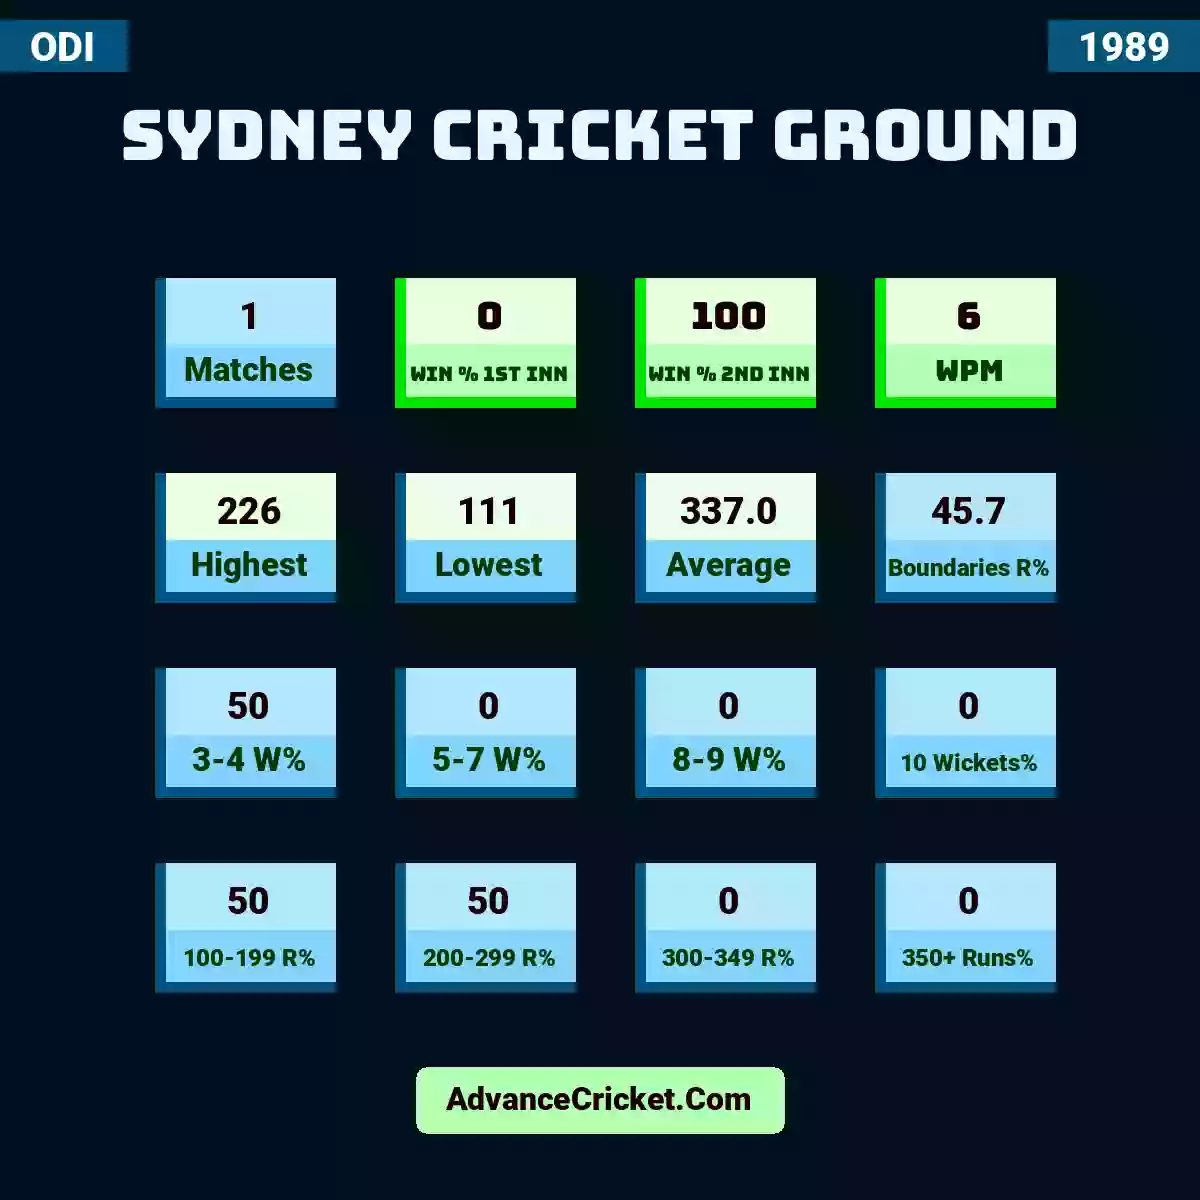 Image showing Sydney Cricket Ground with Matches: 1, Win % 1st Inn: 0, Win % 2nd Inn: 100, WPM: 6, Highest: 226, Lowest: 111, Average: 337.0, Boundaries R%: 45.7, 3-4 W%: 50, 5-7 W%: 0, 8-9 W%: 0, 10 Wickets%: 0, 100-199 R%: 50, 200-299 R%: 50, 300-349 R%: 0, 350+ Runs%: 0.